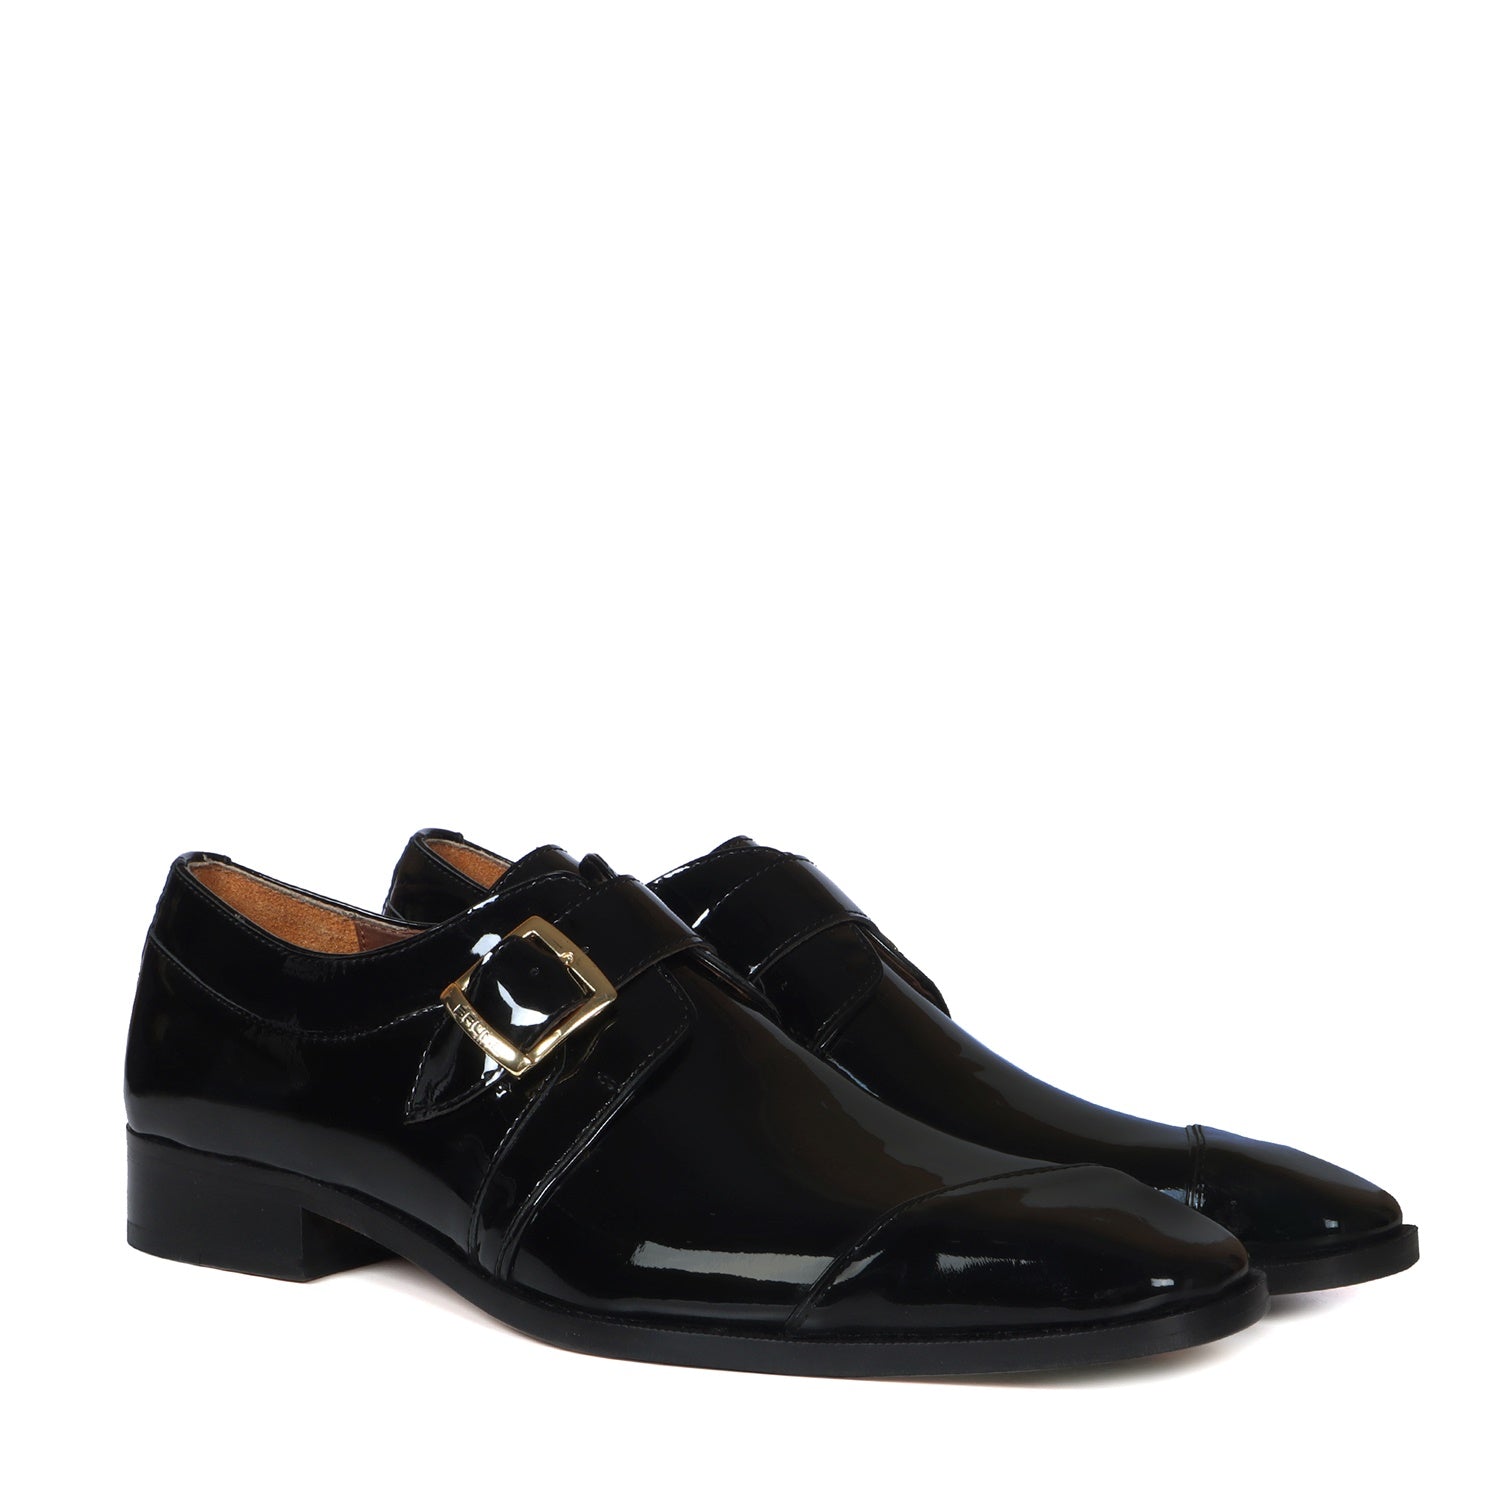 Slant Cap Toe Single Monk Formal Shoes in Black Patent Leather By Brune & Bareskin